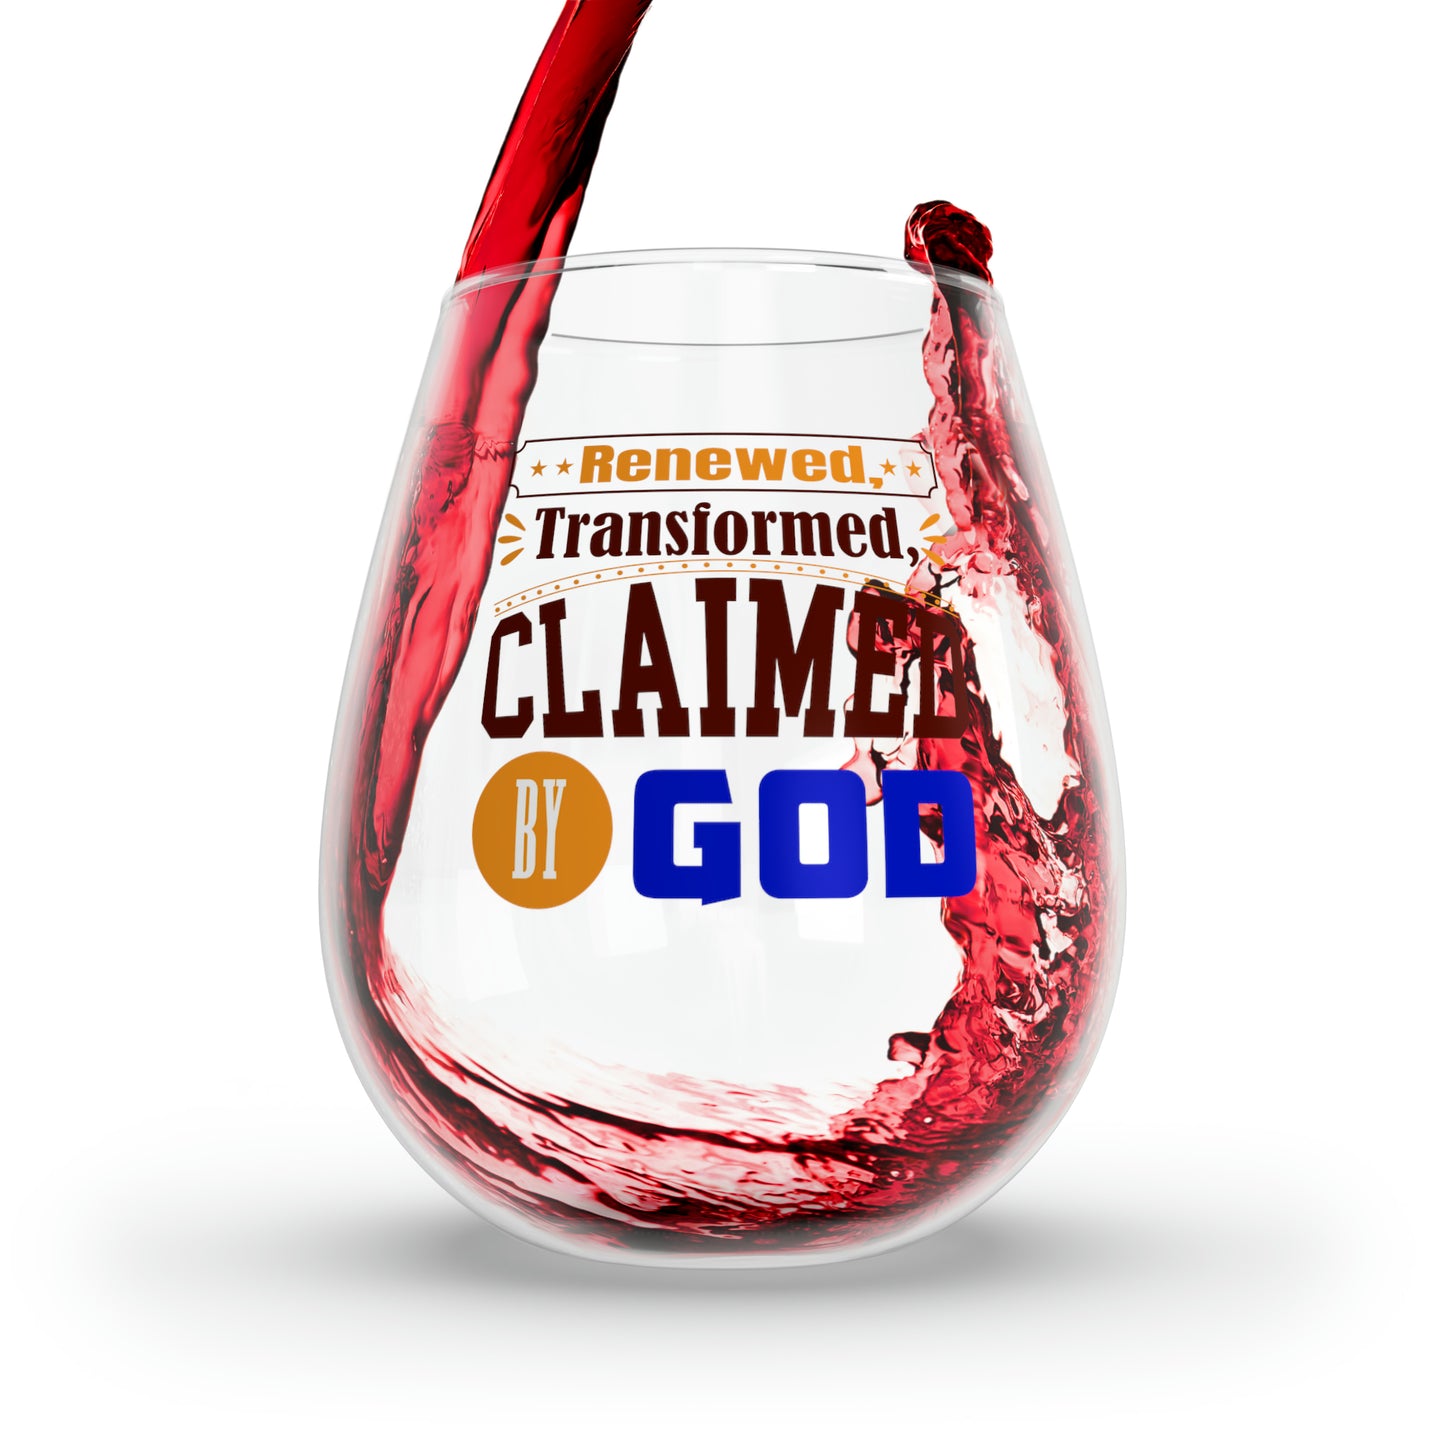 Renewed, Transformed Claimed By God Stemless Wine Glass, 11.75oz